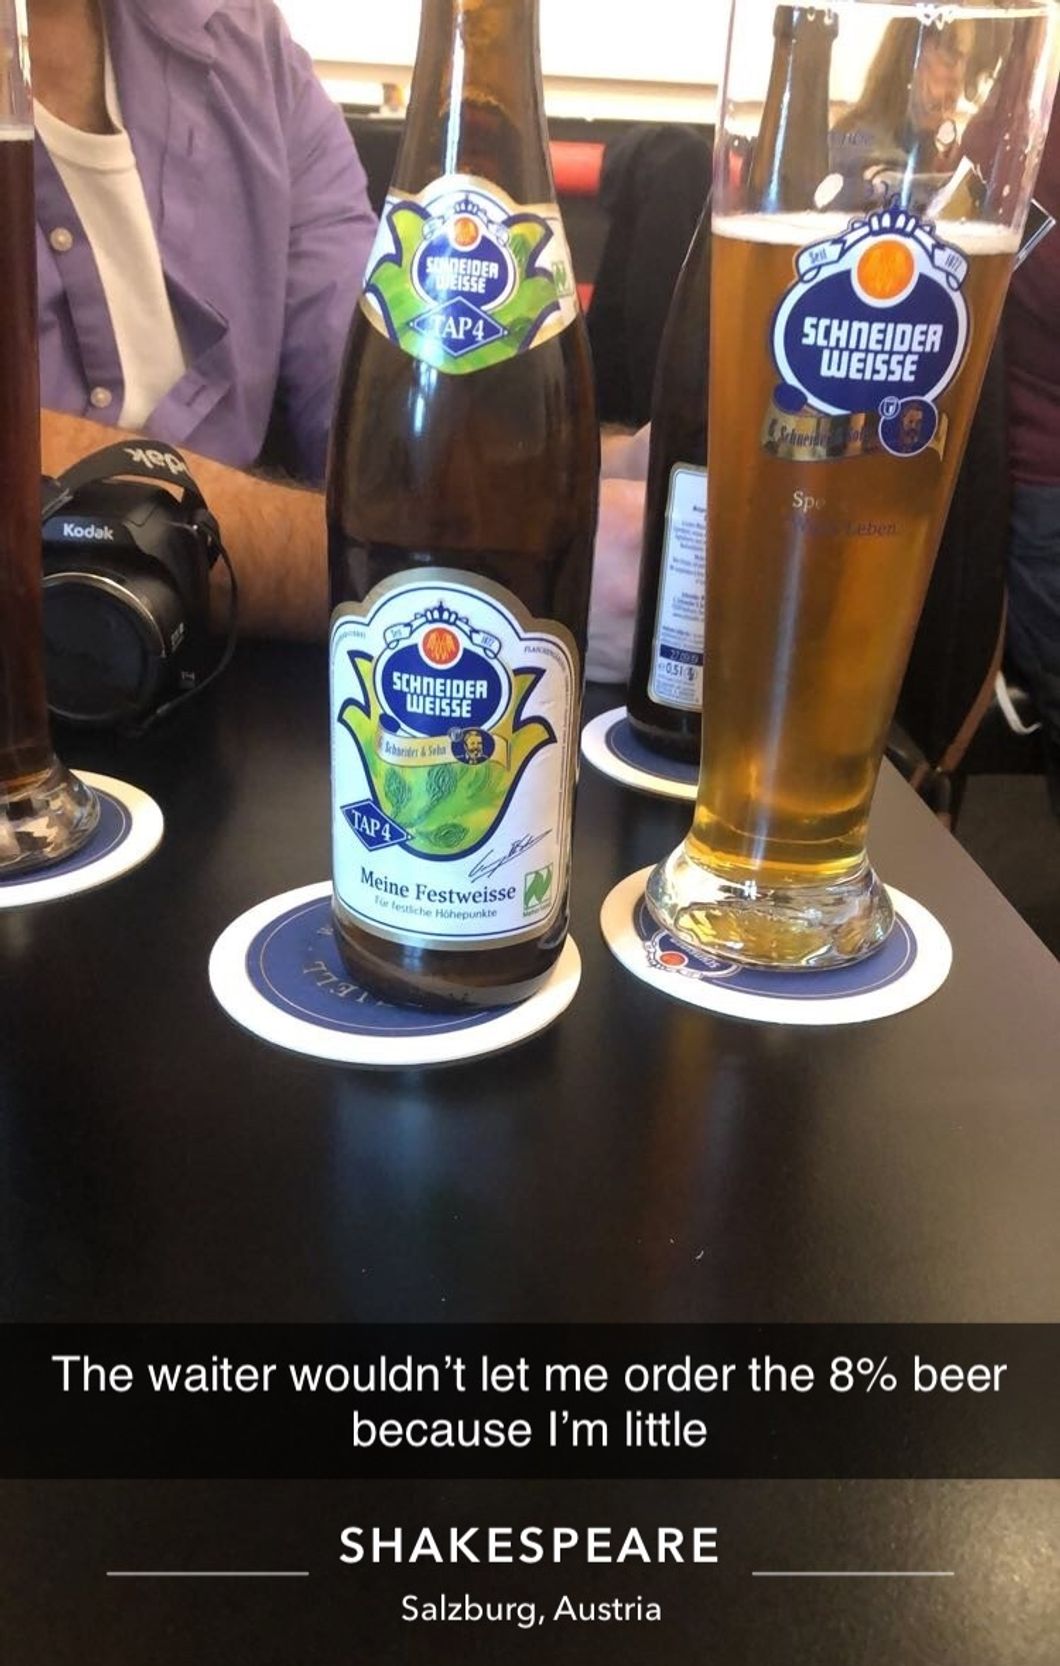 Ordering Beer As A Woman In Austria